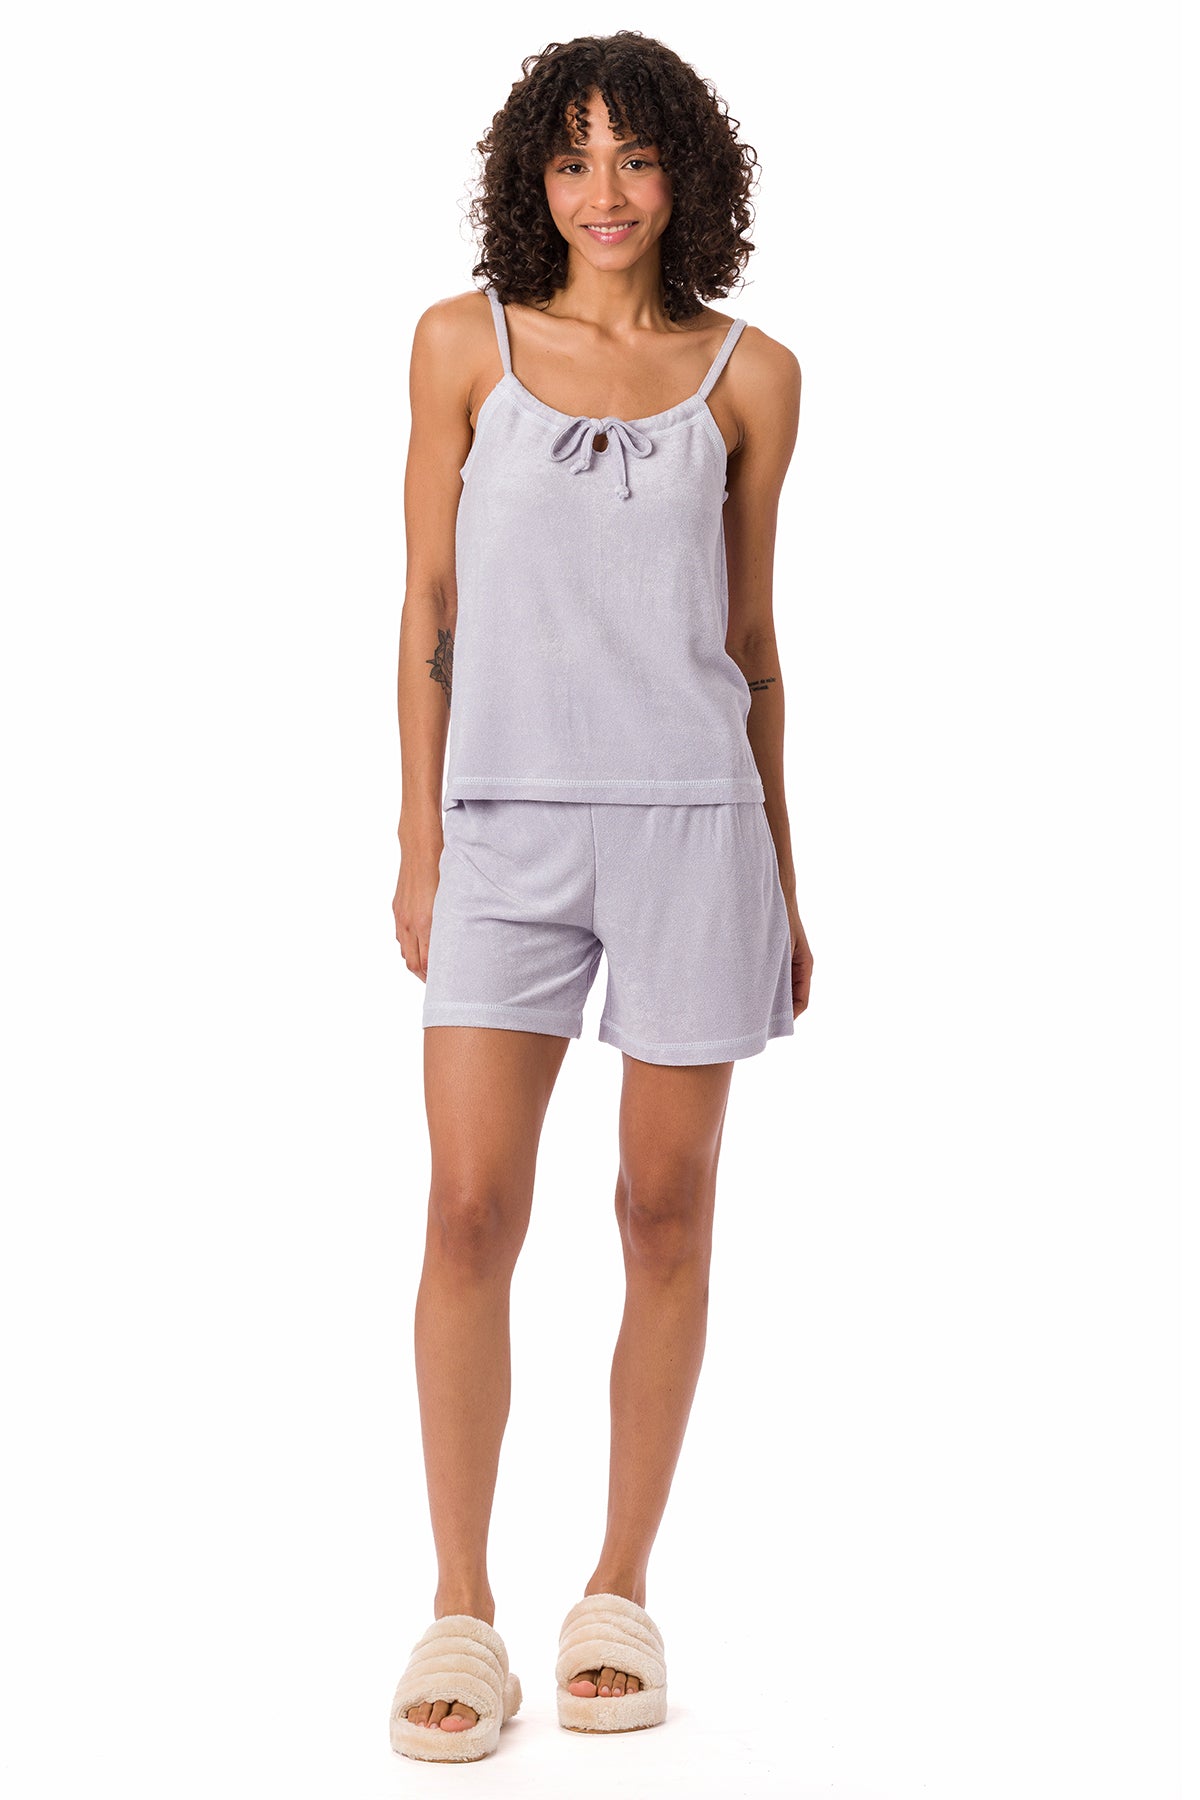 Suvi NYC women's 2-piece short and tank top pajama set . Terry Cotton